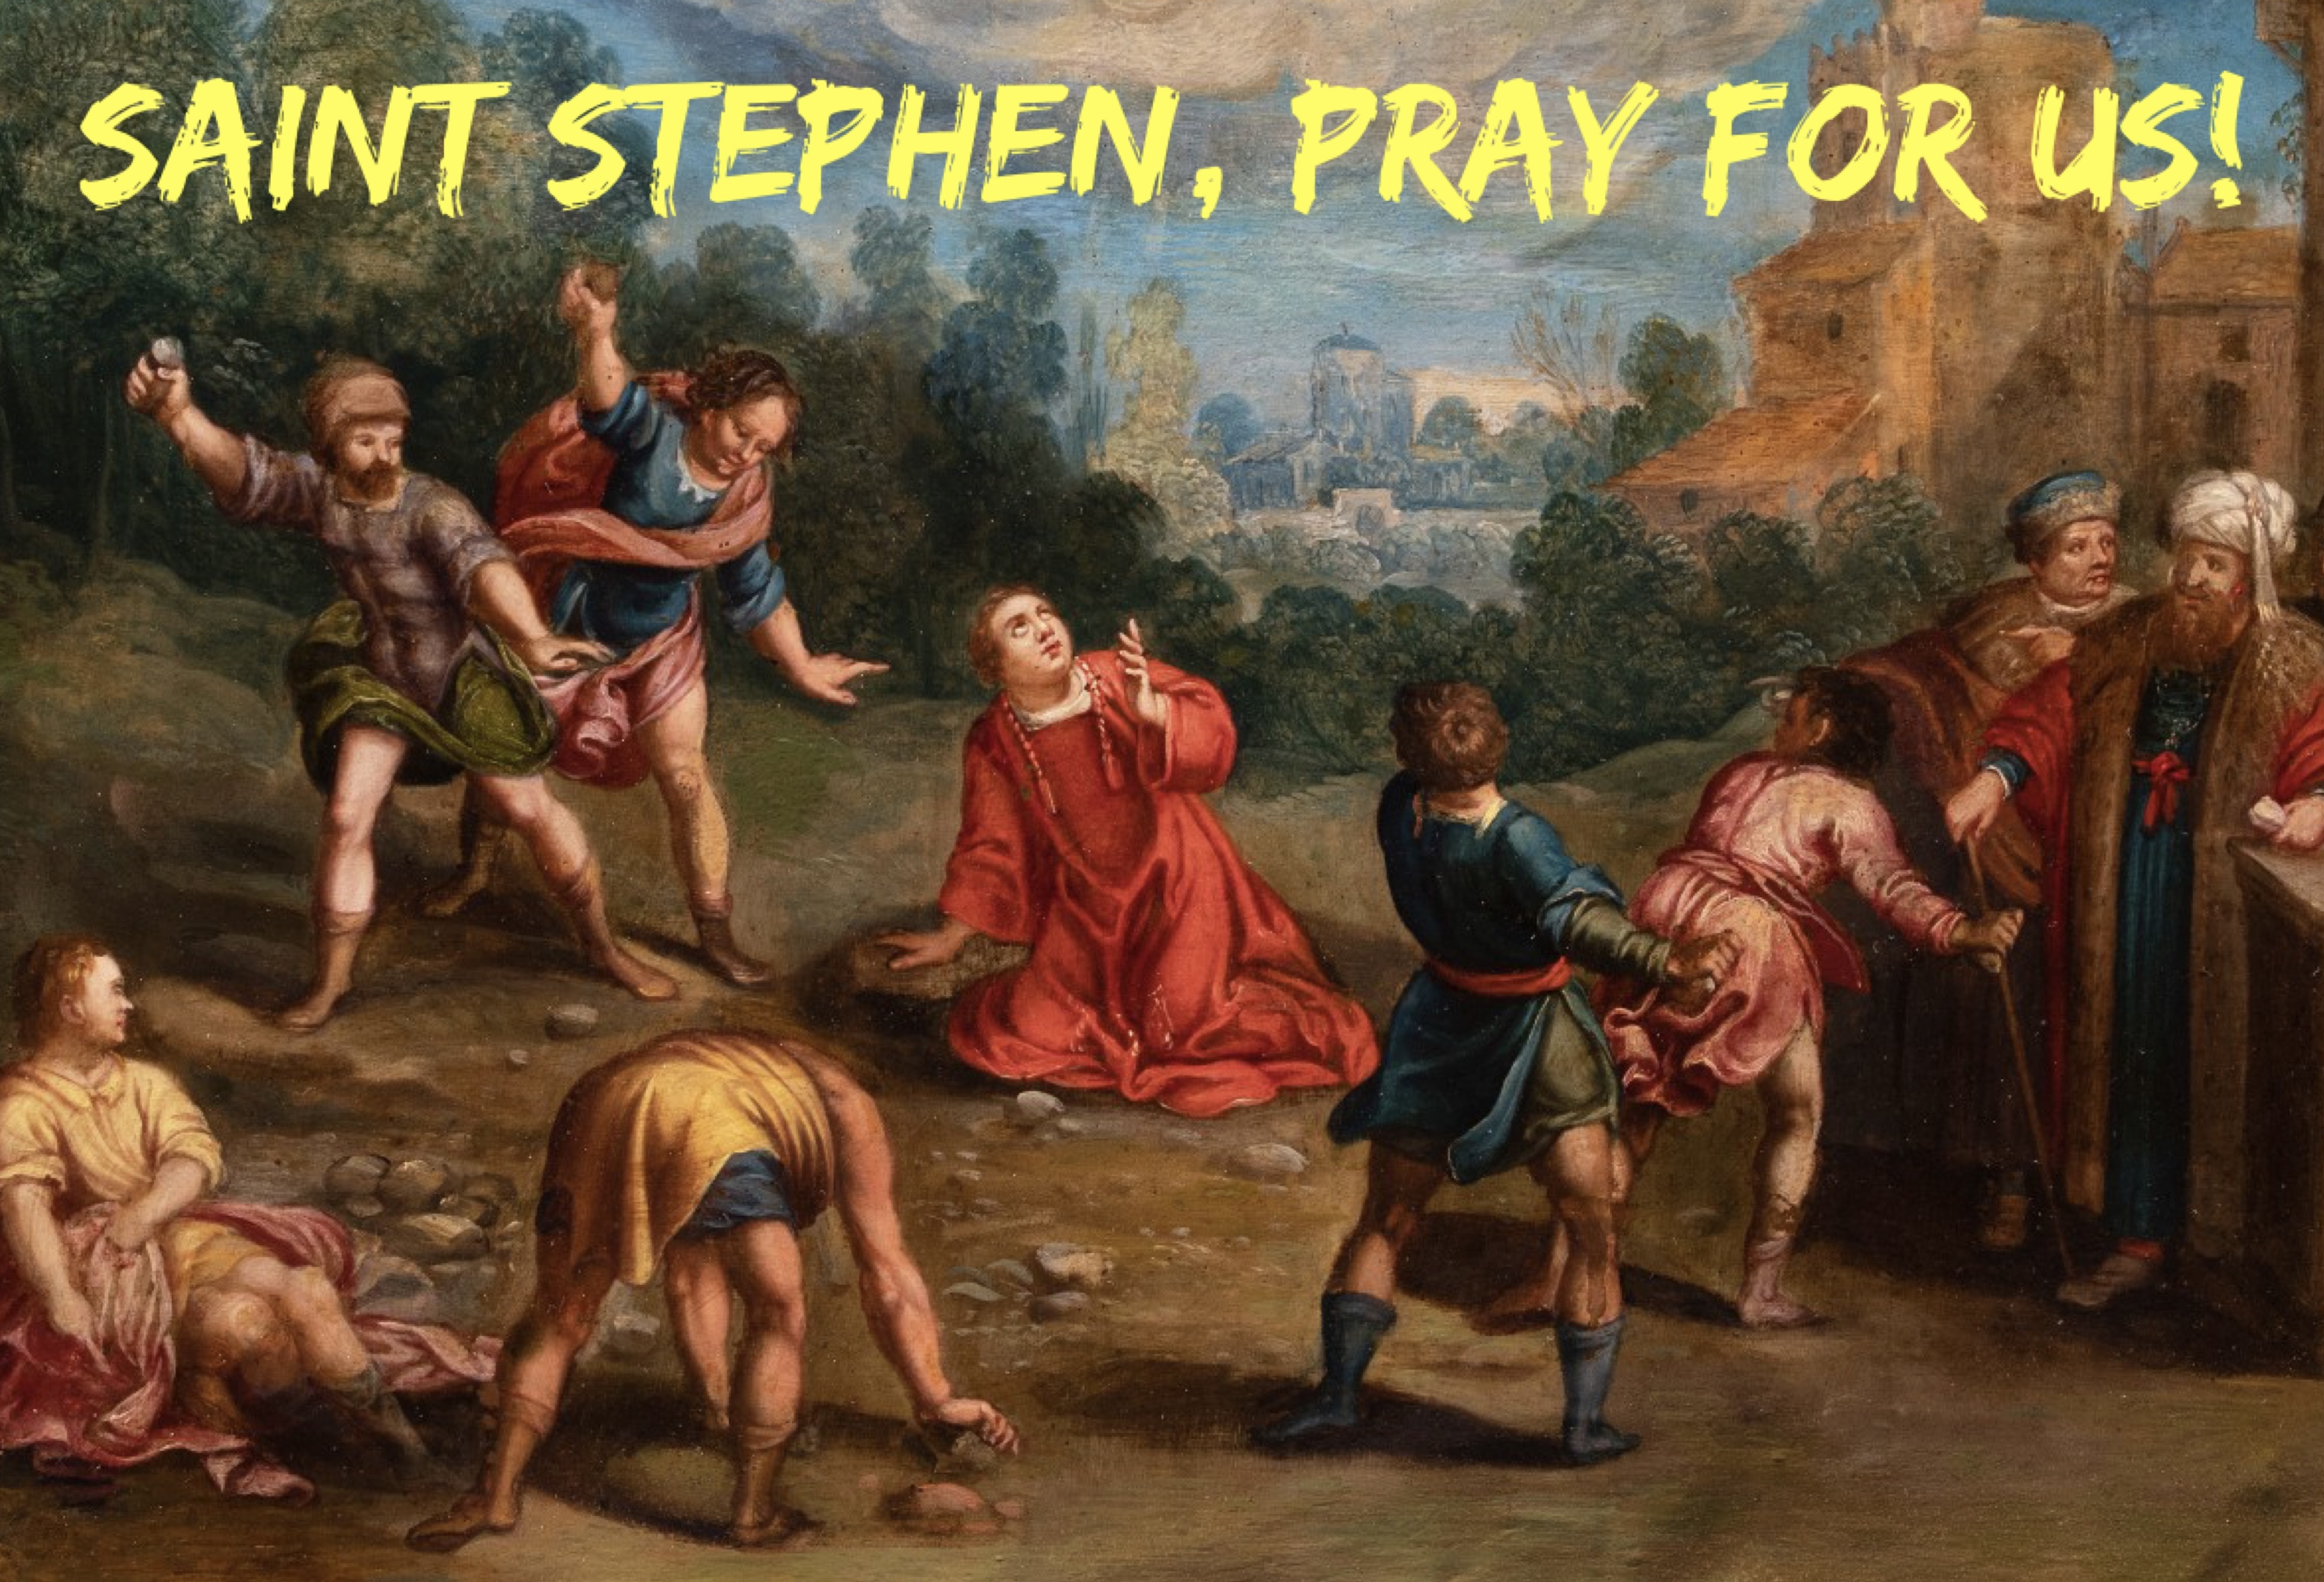 26th December – Saint Stephen